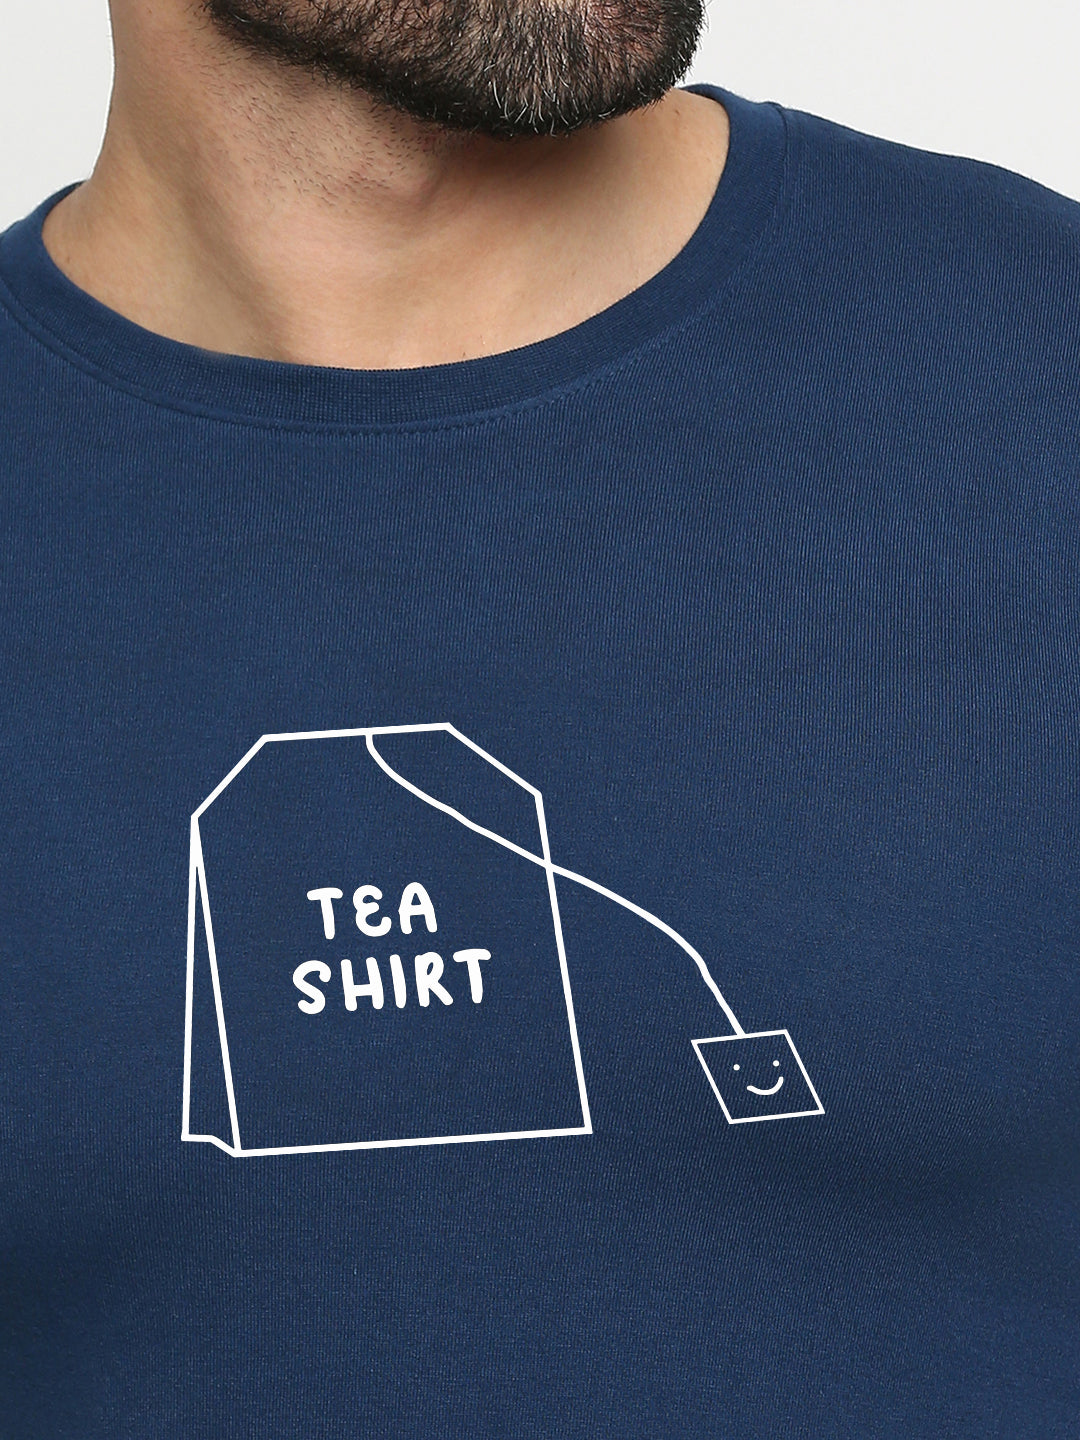 "Tea Shirt" Funny T-Shirt